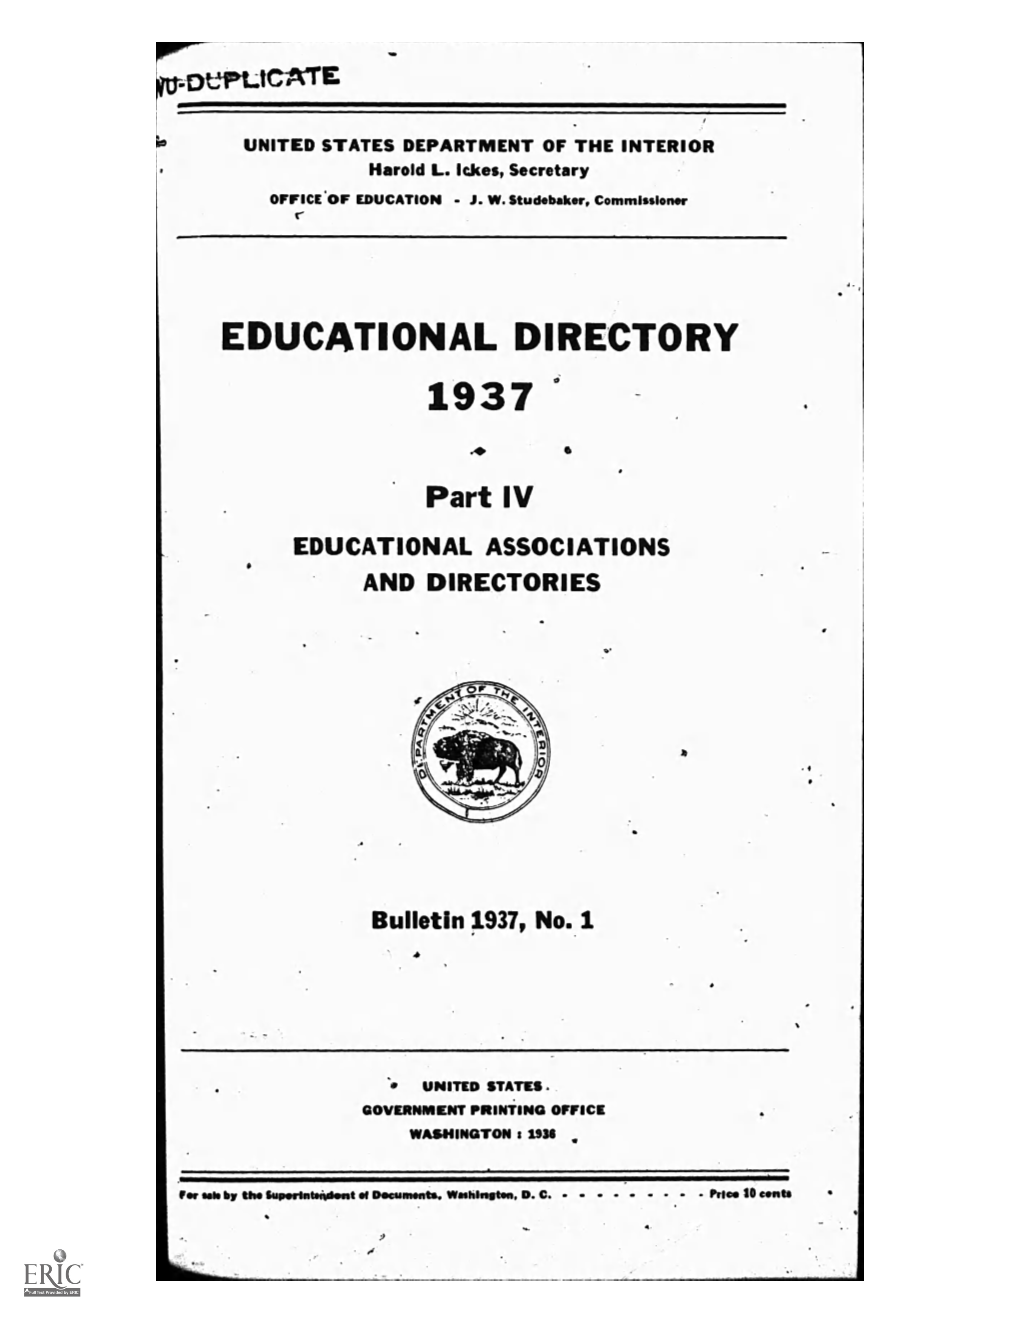 Educational Directory 1937